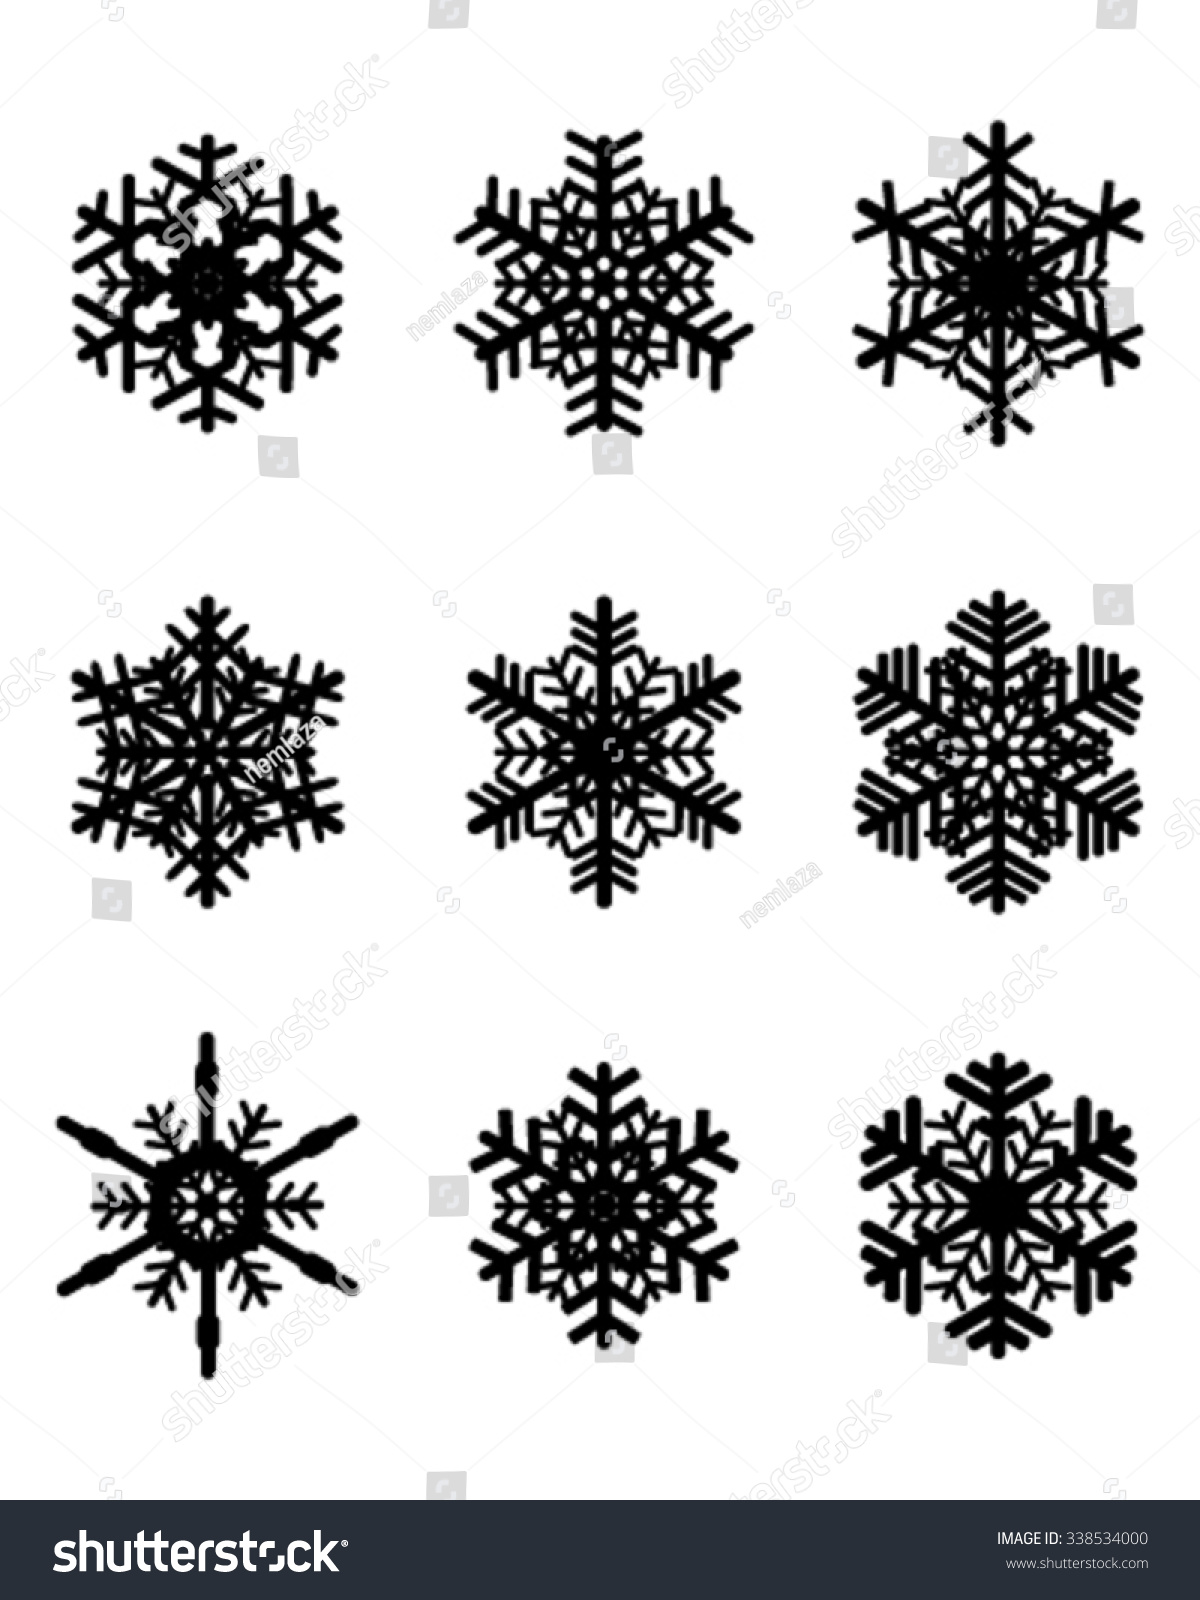 Set Black Snowflake Vector Stock Vector 338534000 - Shutterstock